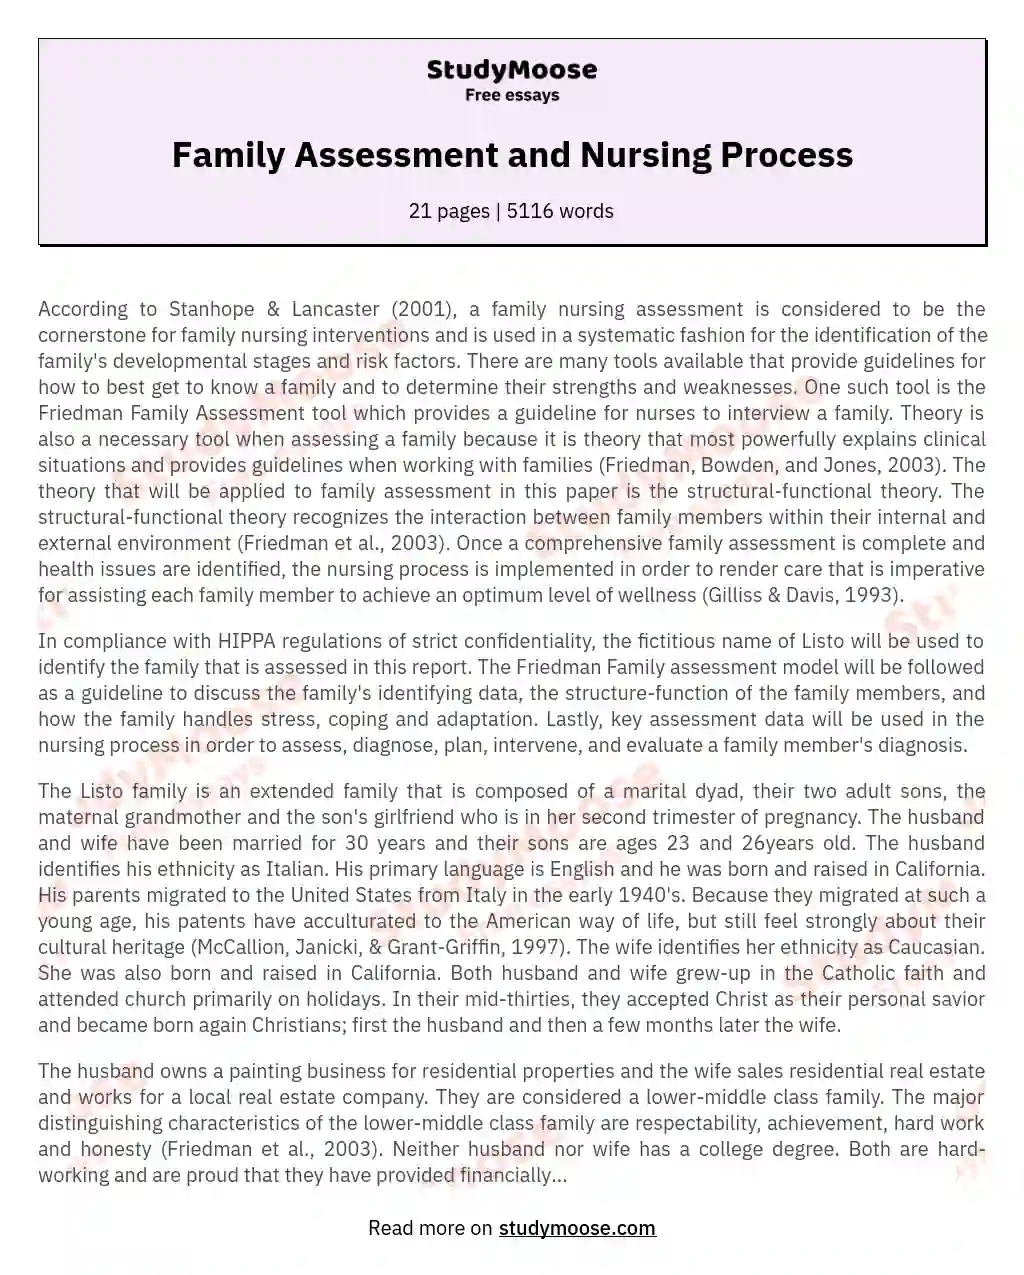 Family Assessment and Nursing Process essay